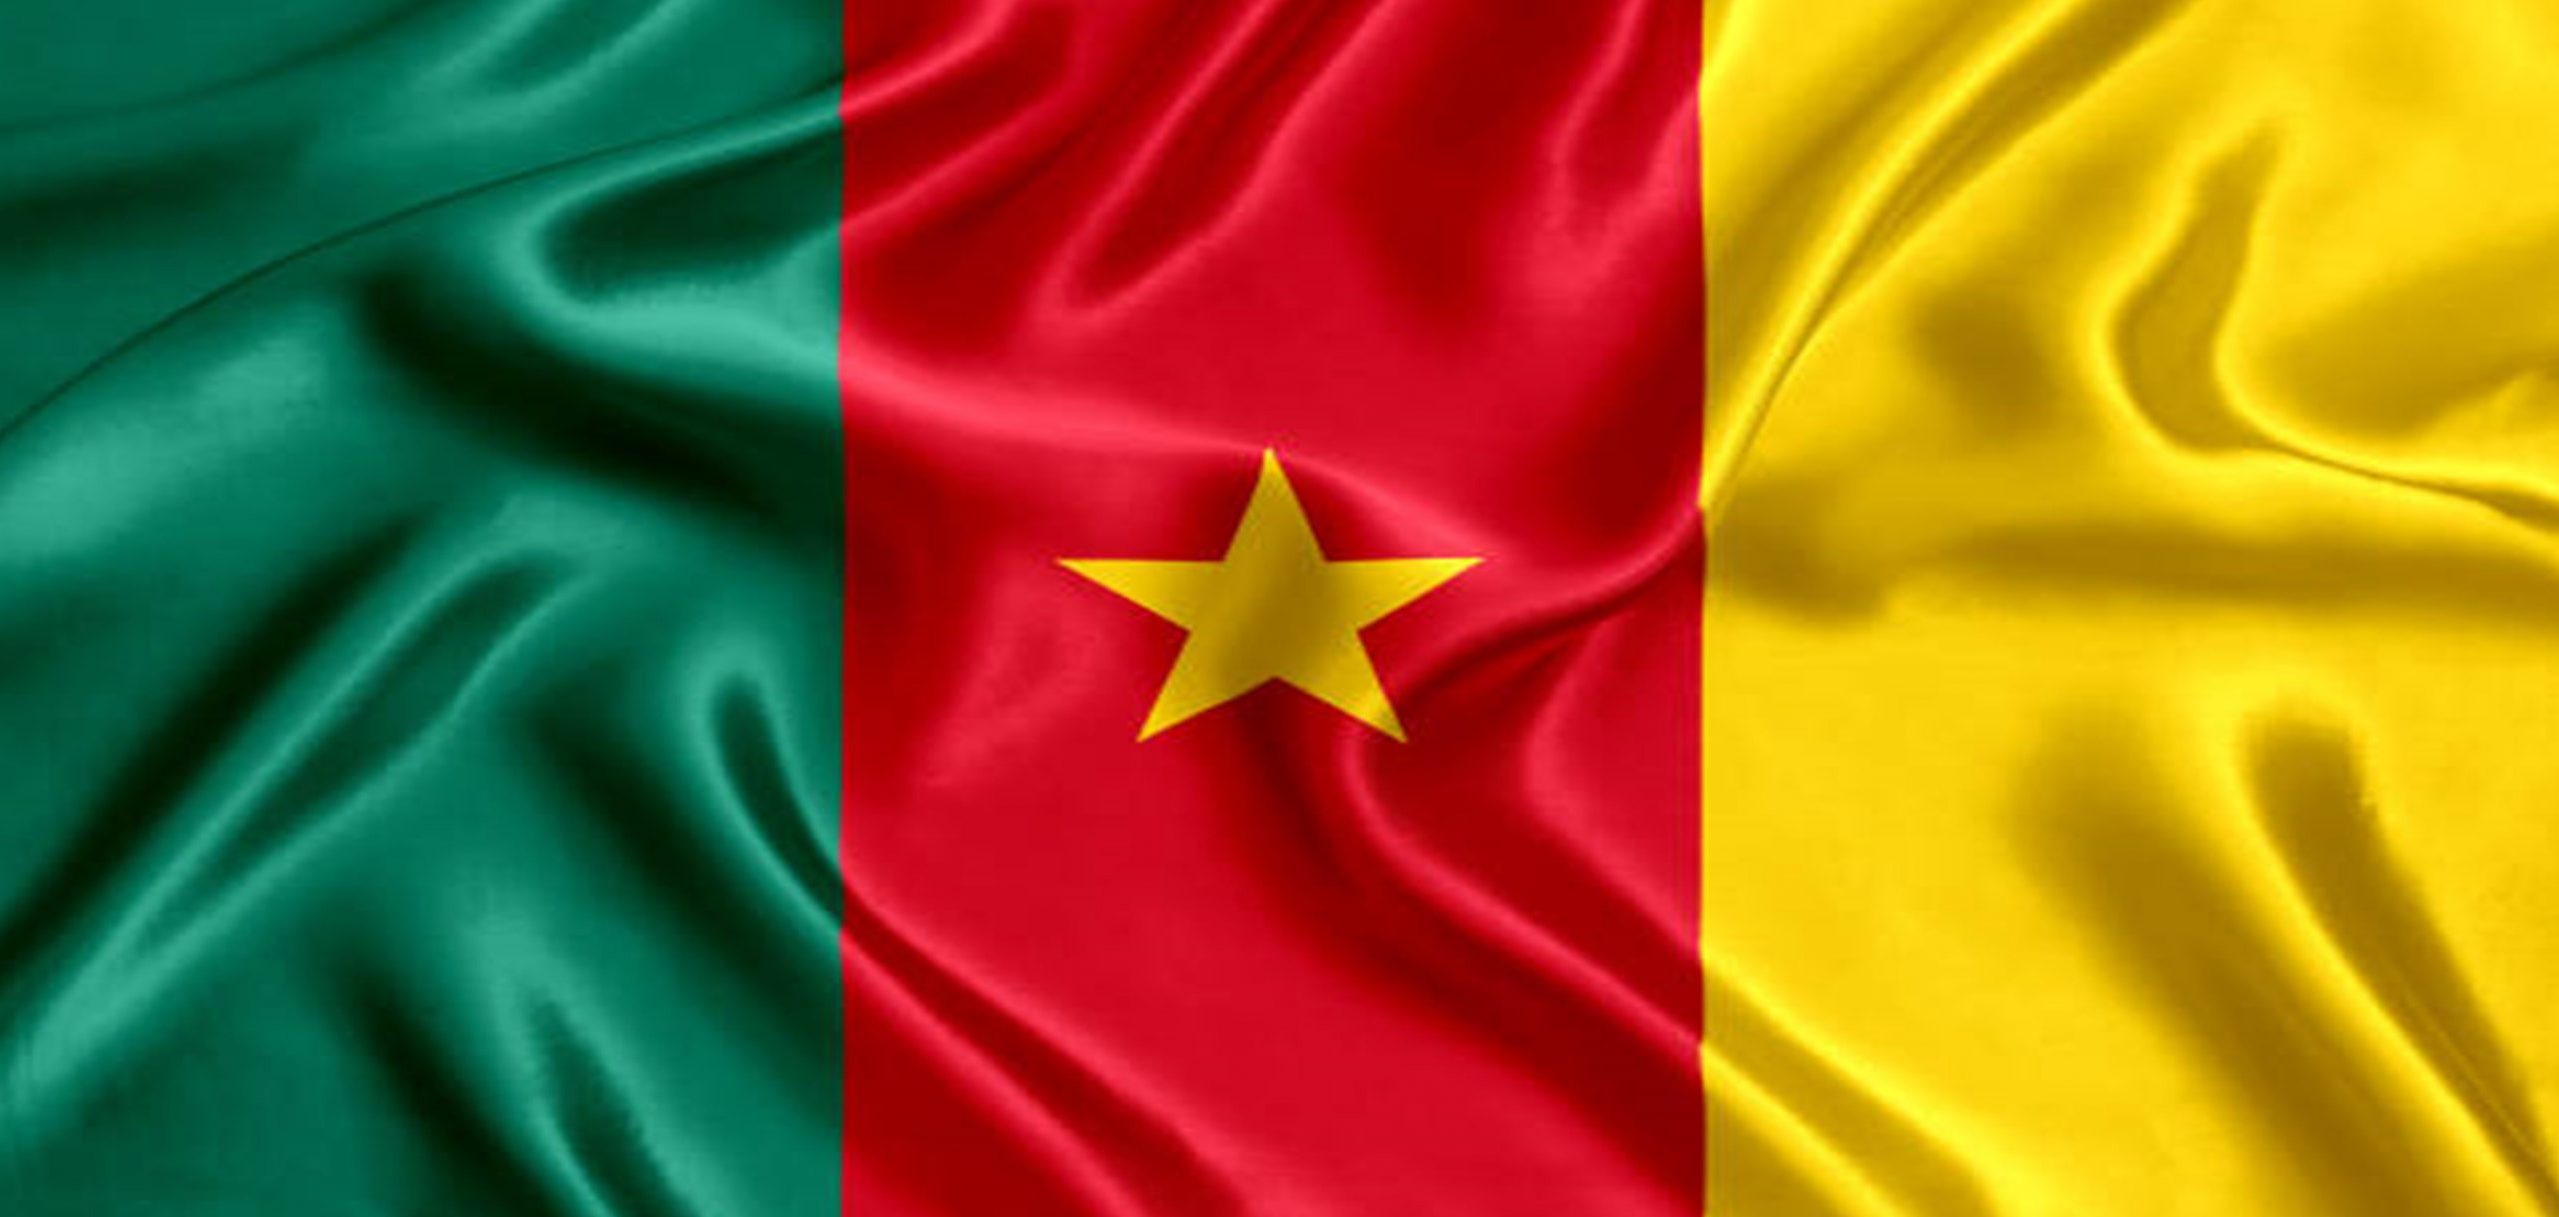 United Cameroon